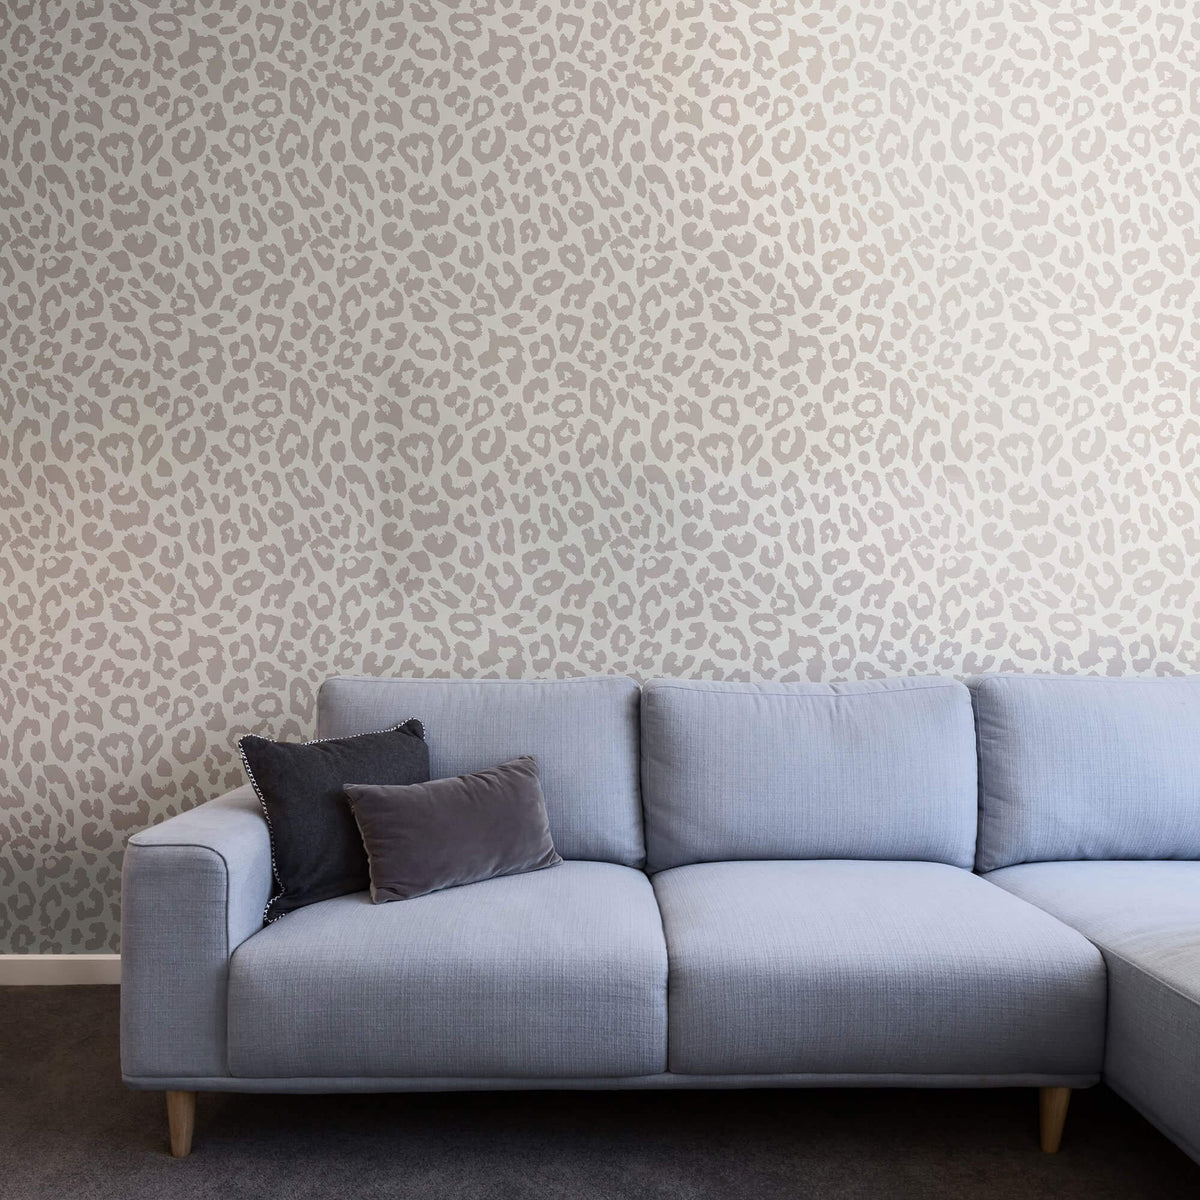 leopard wallpaper for room